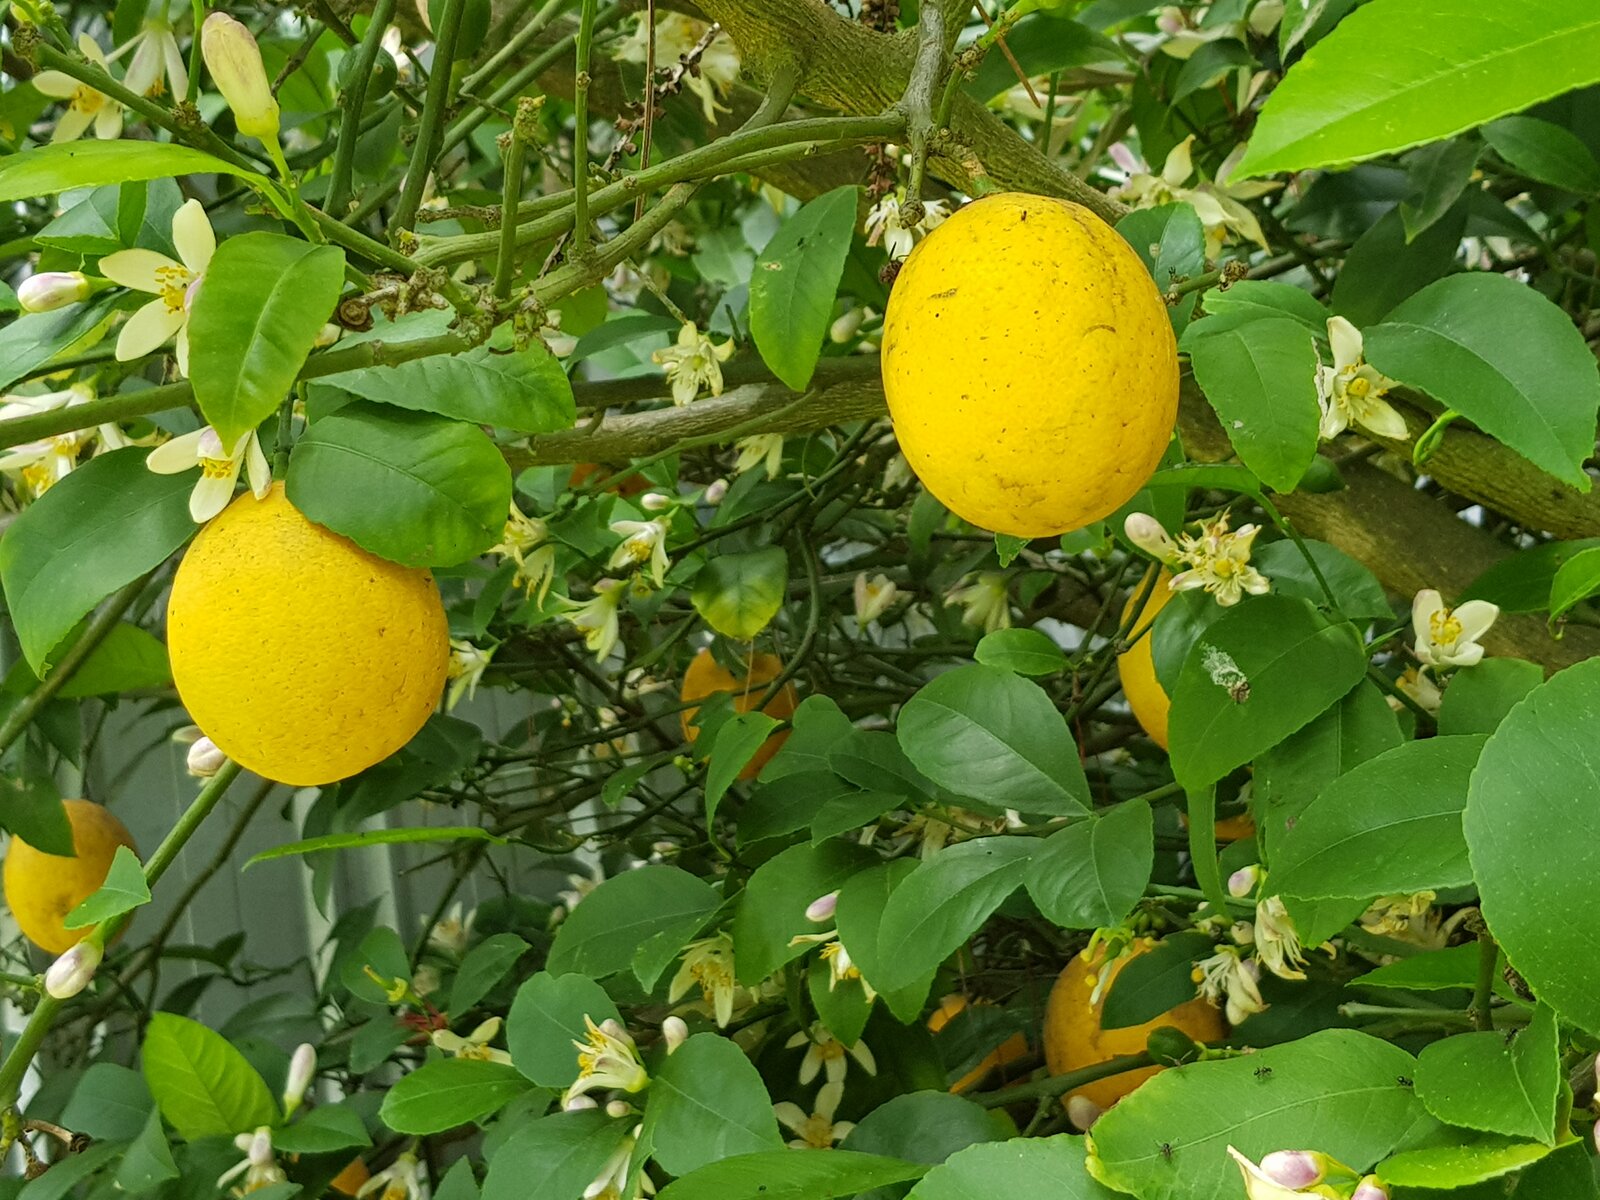 Hidden underneath were the ripe lemons